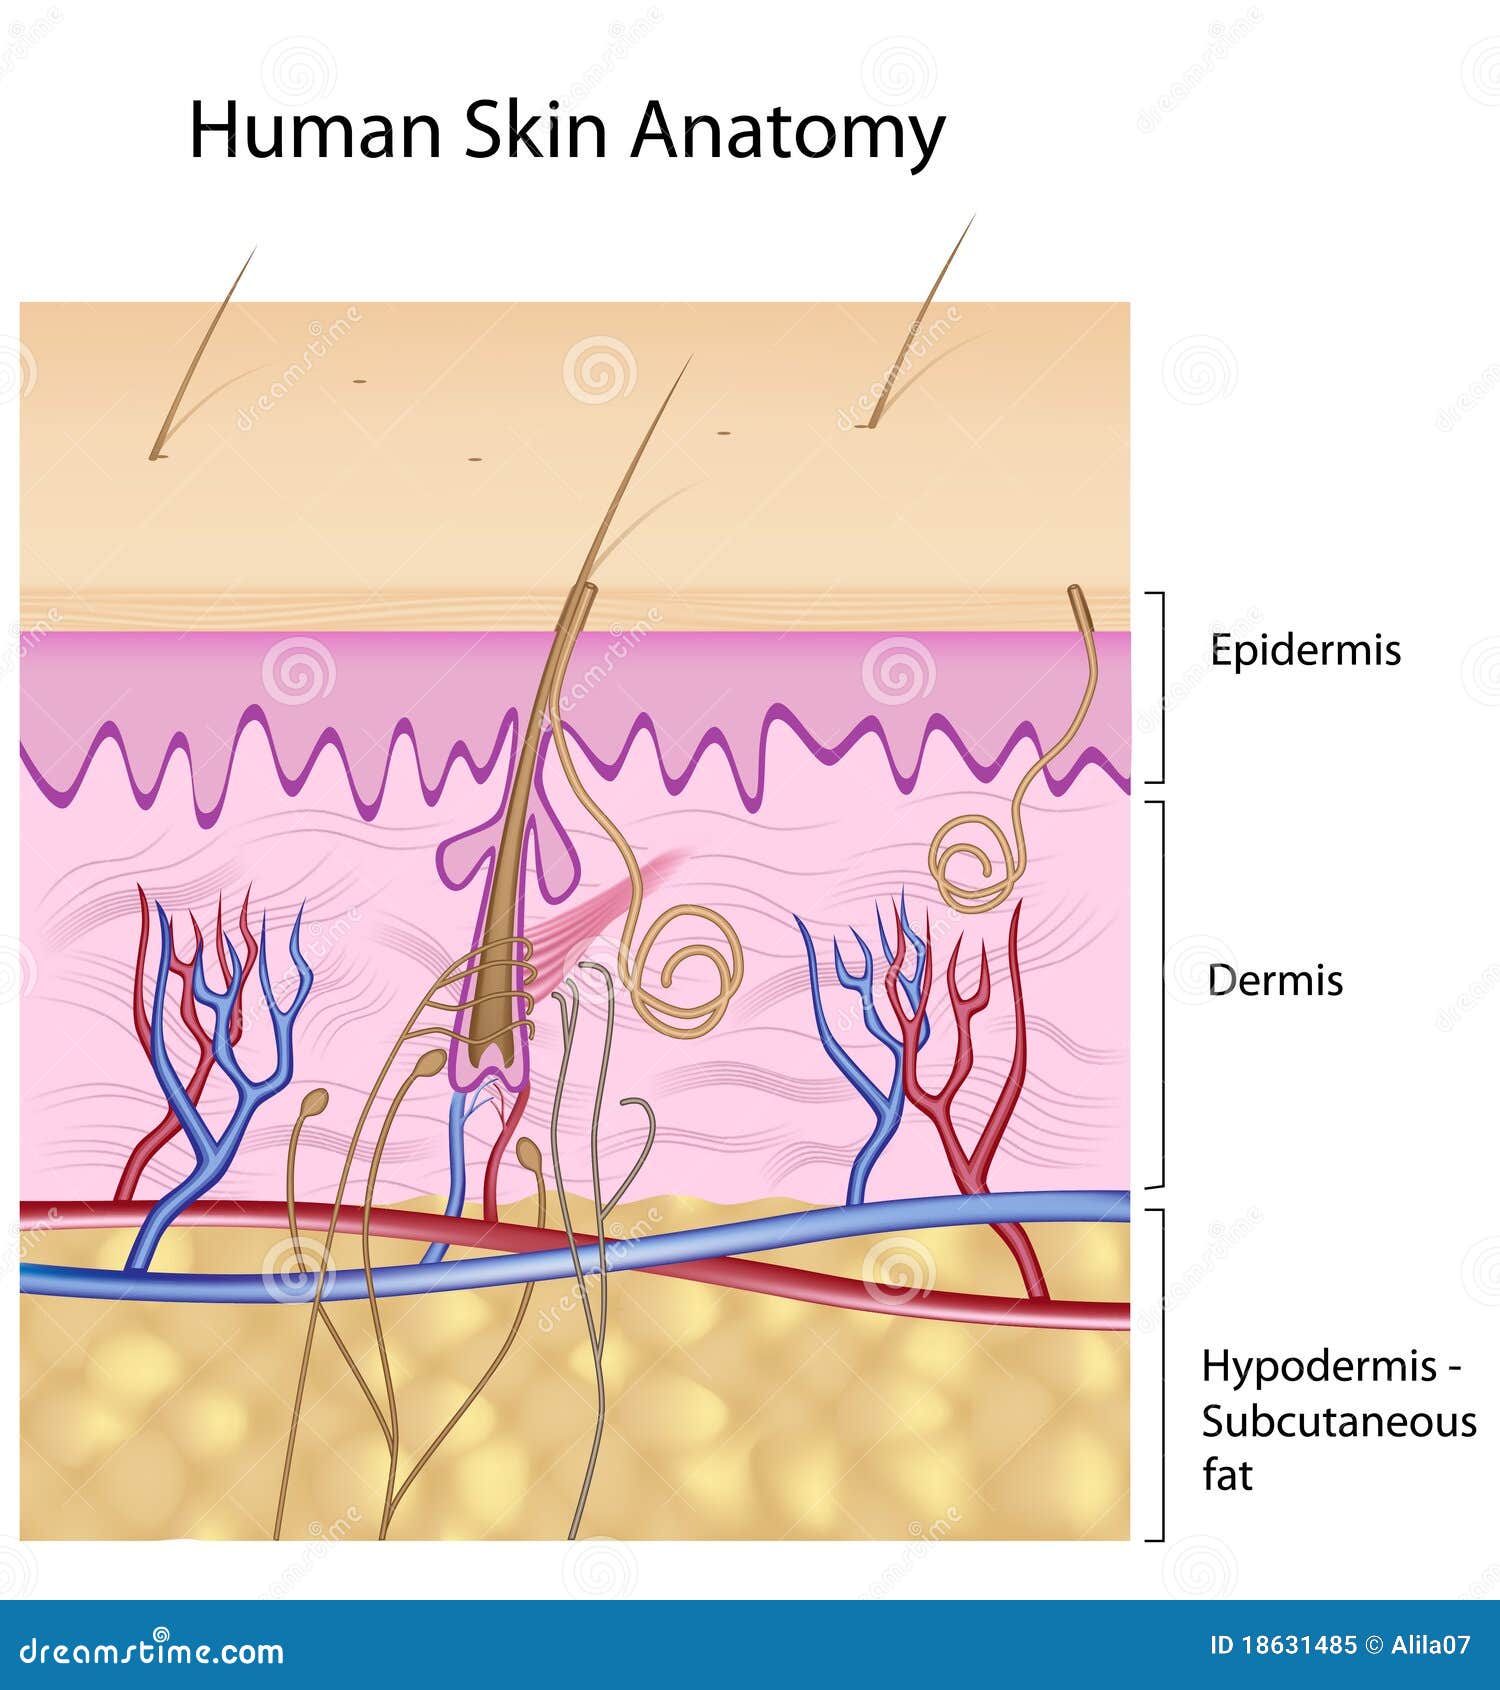 Human Skin Anatomy, Non-labeled Version Royalty Free Stock Photo